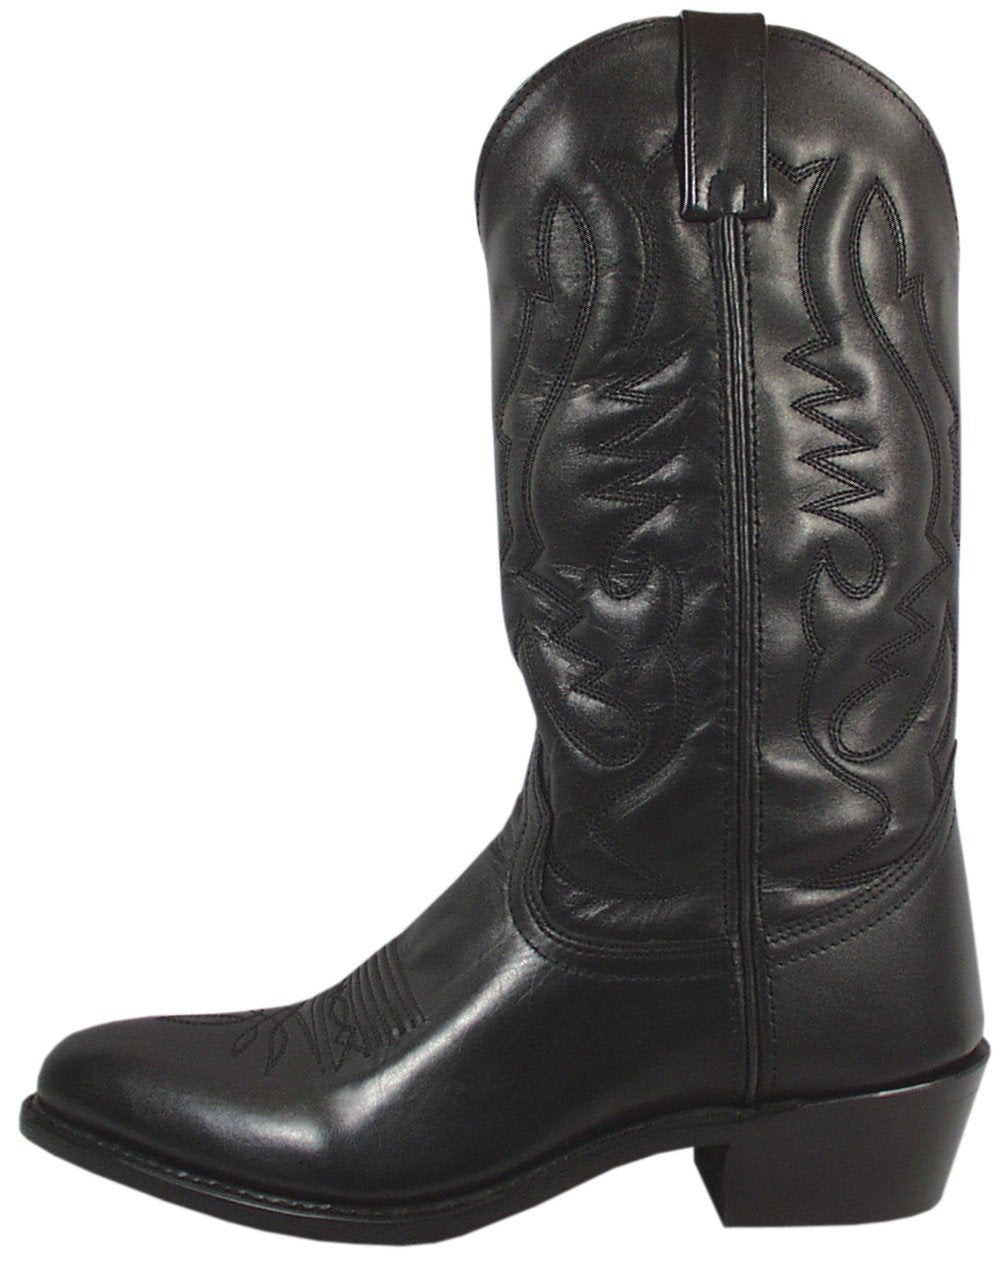 Men's Smoky Mountain Denver Leather Boot in Black